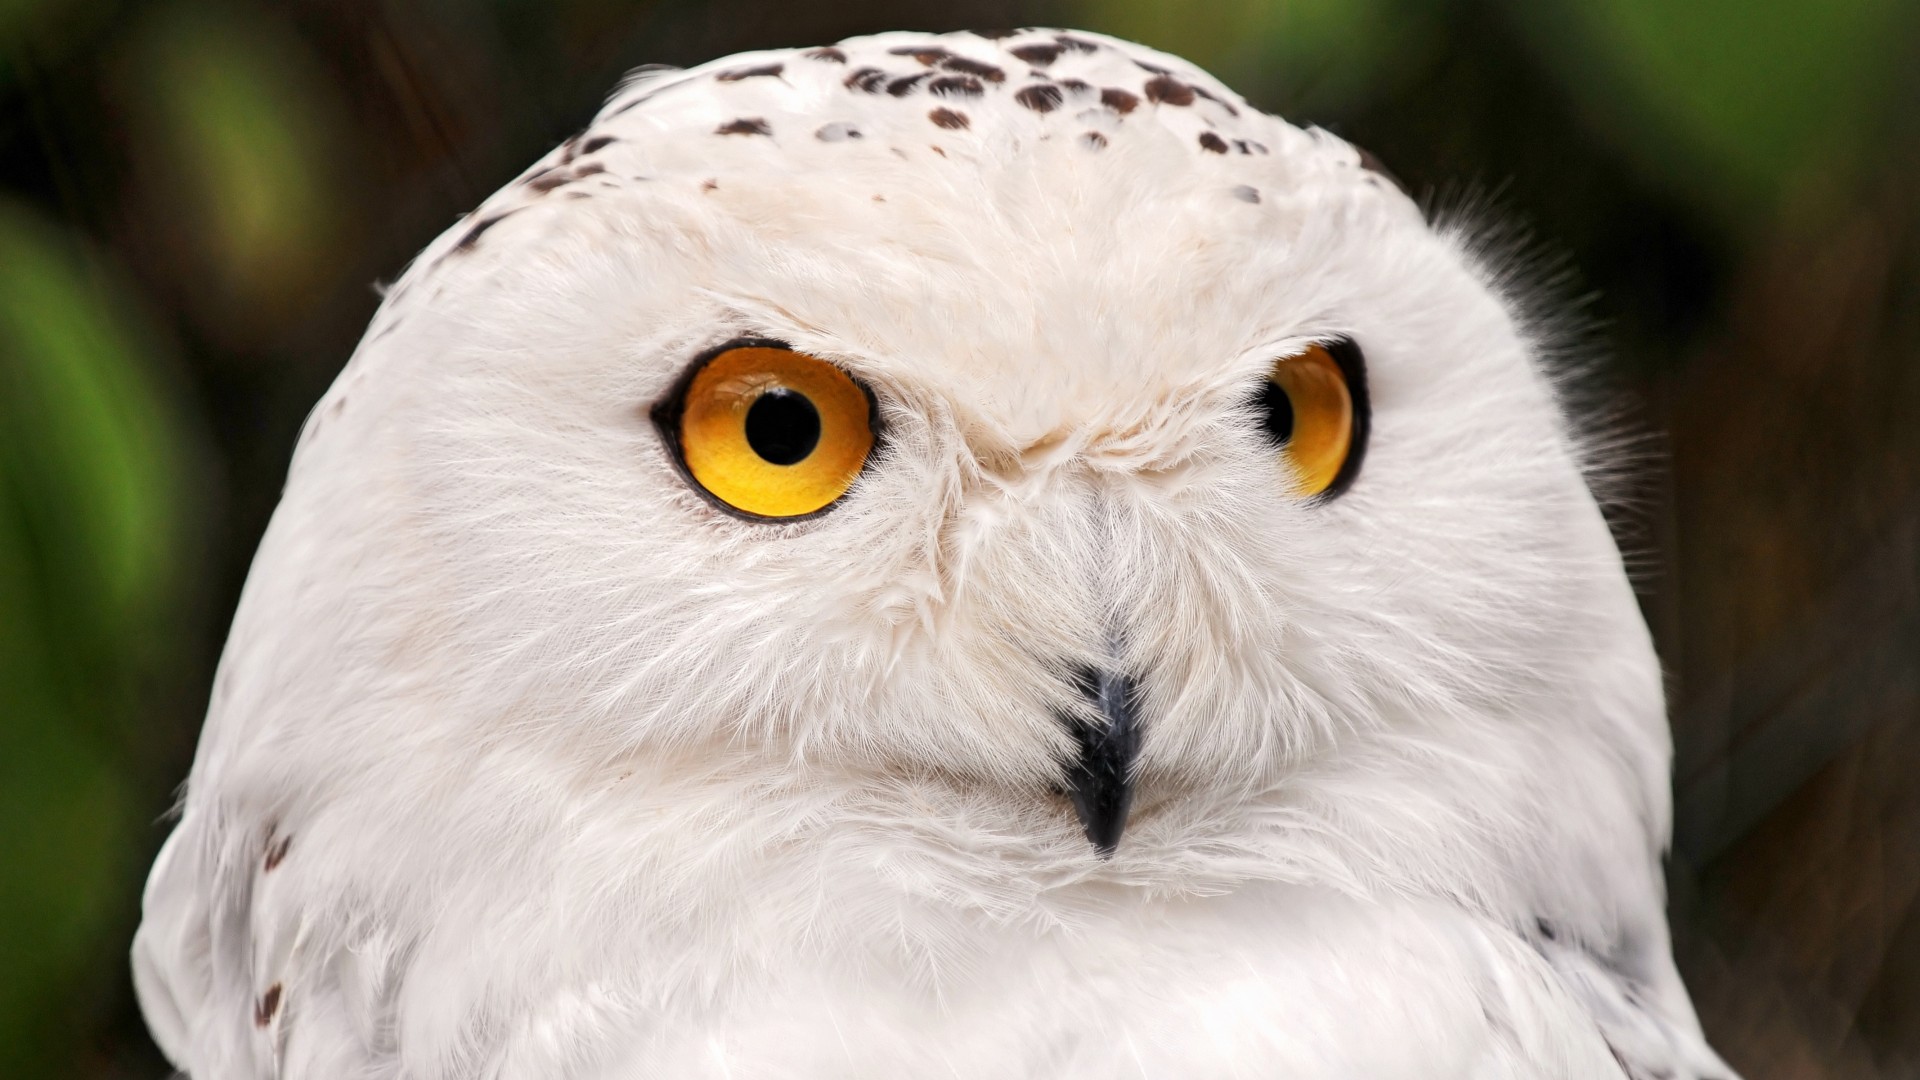 snowy owl, yellow eyes, portrait, wild nature (horizontal)